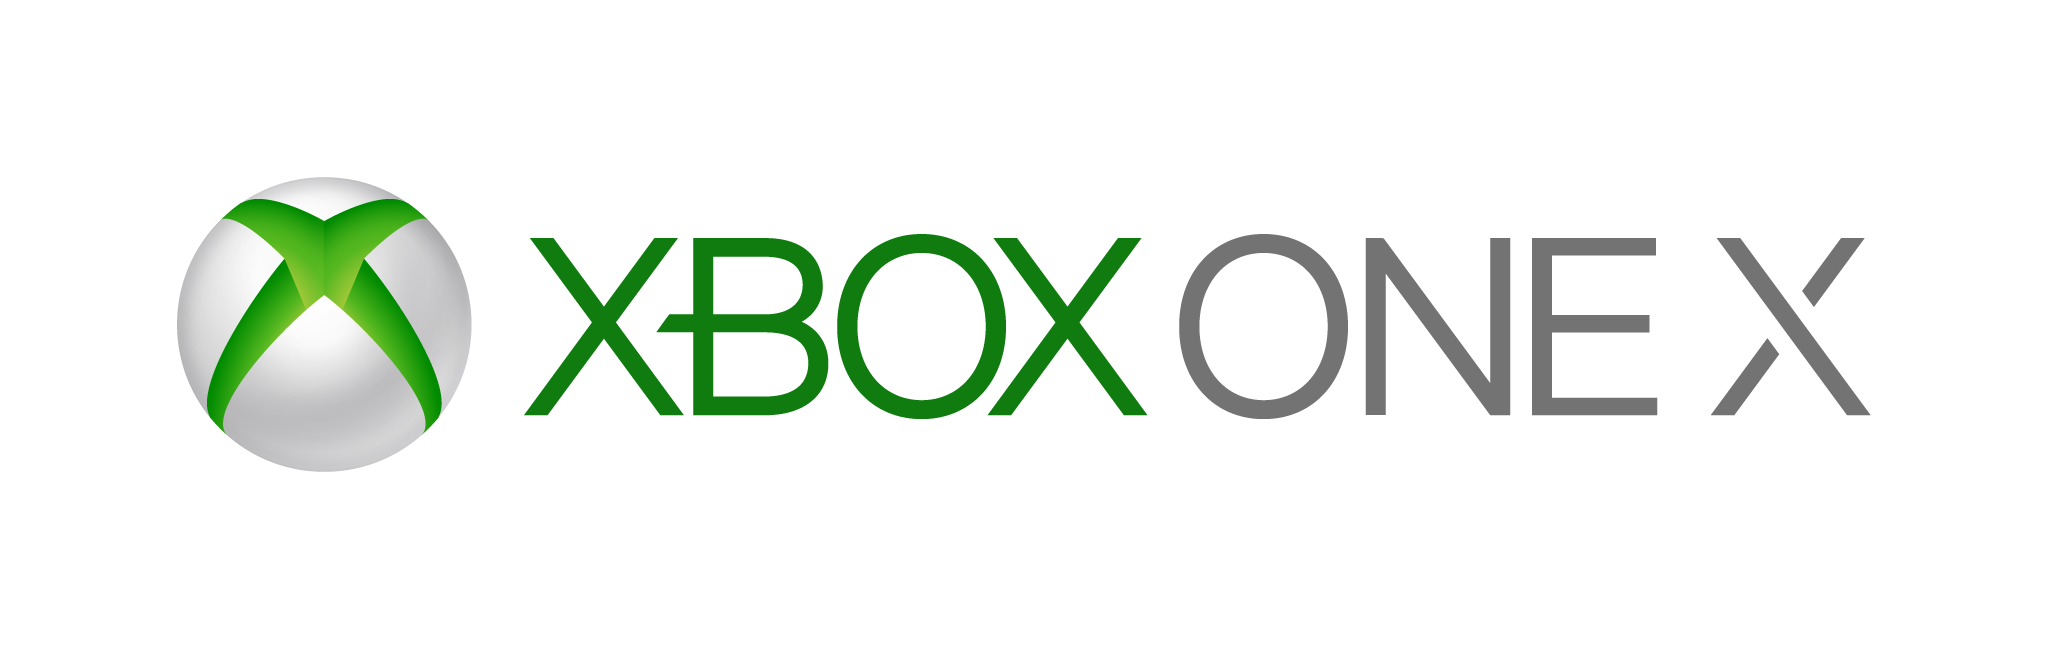 Xbox 360 technical problems - Wikipedia